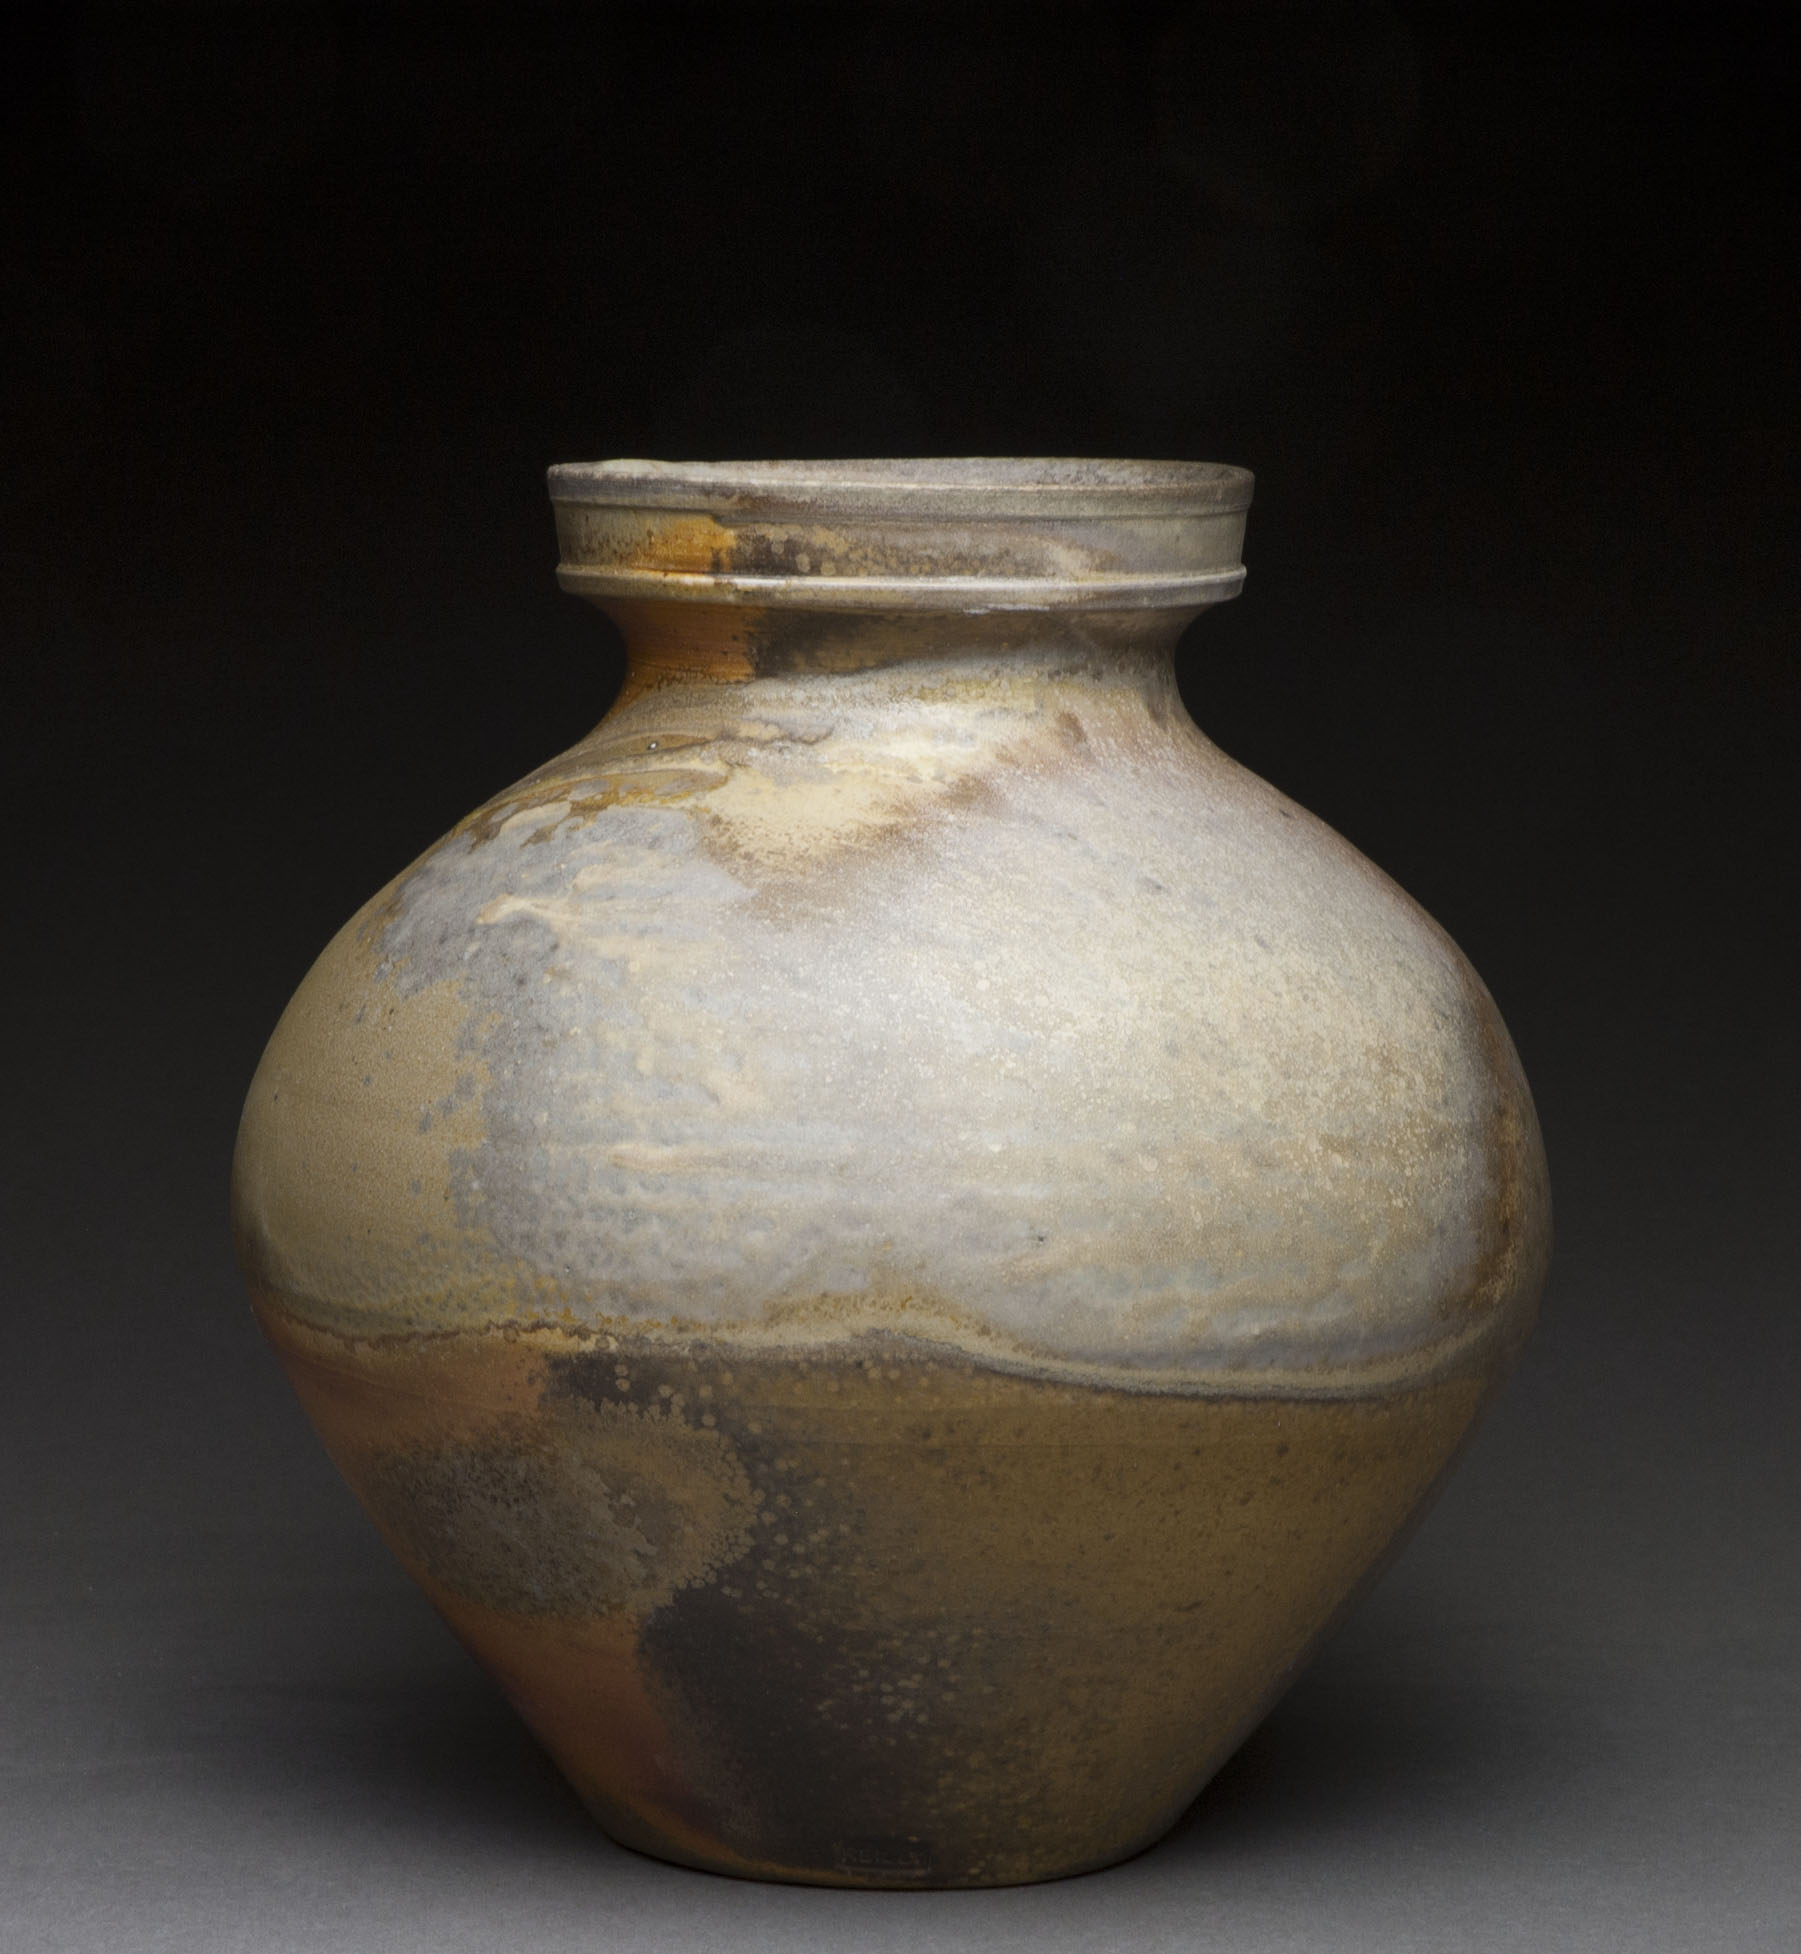    Jar , wood fired stoneware, 2014  